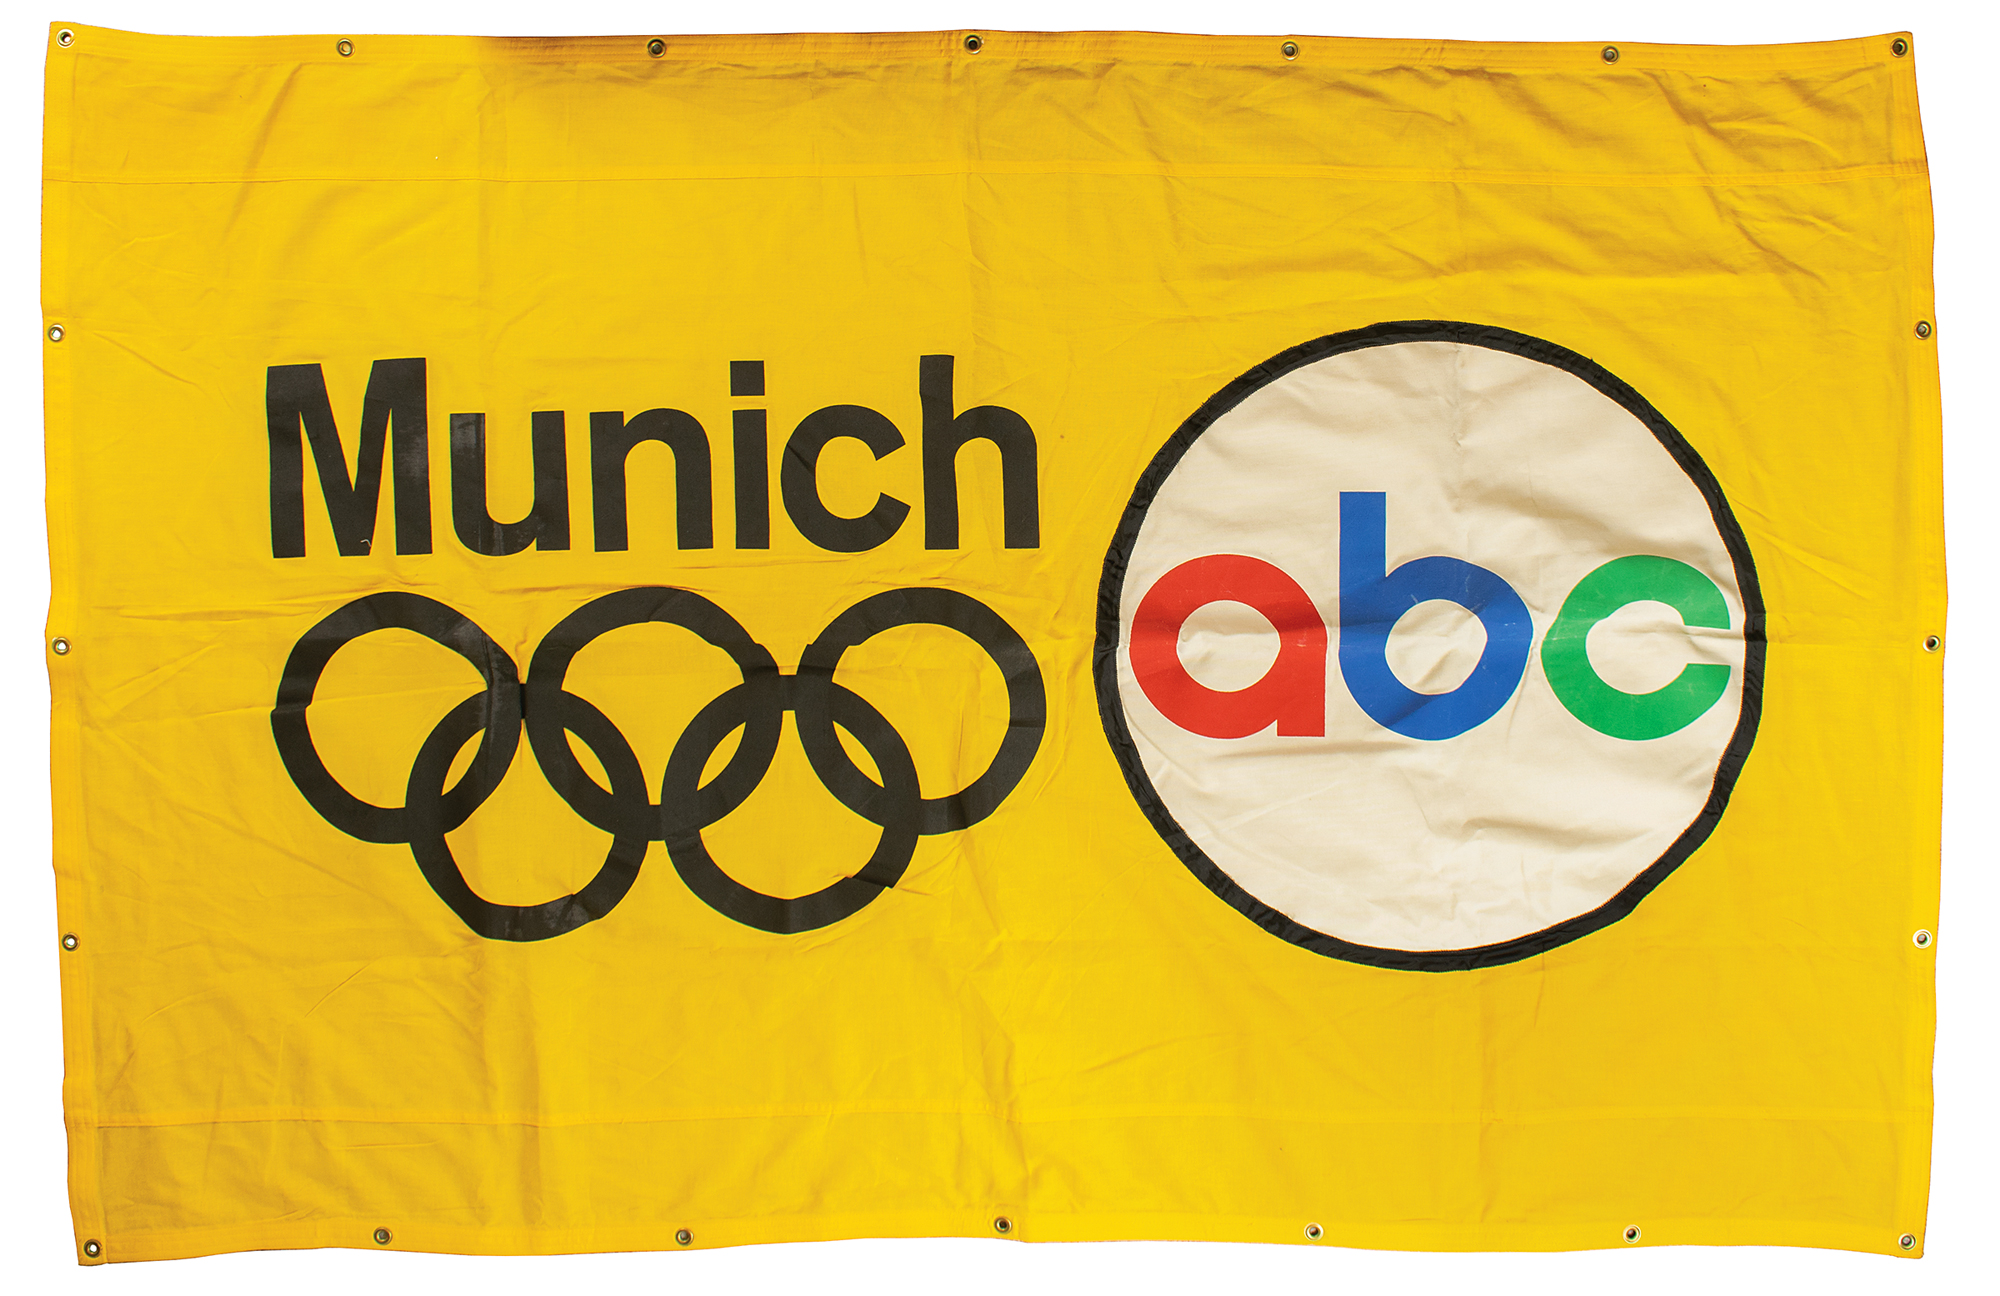 Lot #6088 Munich 1972 Summer Olympics ABC Sports Banner